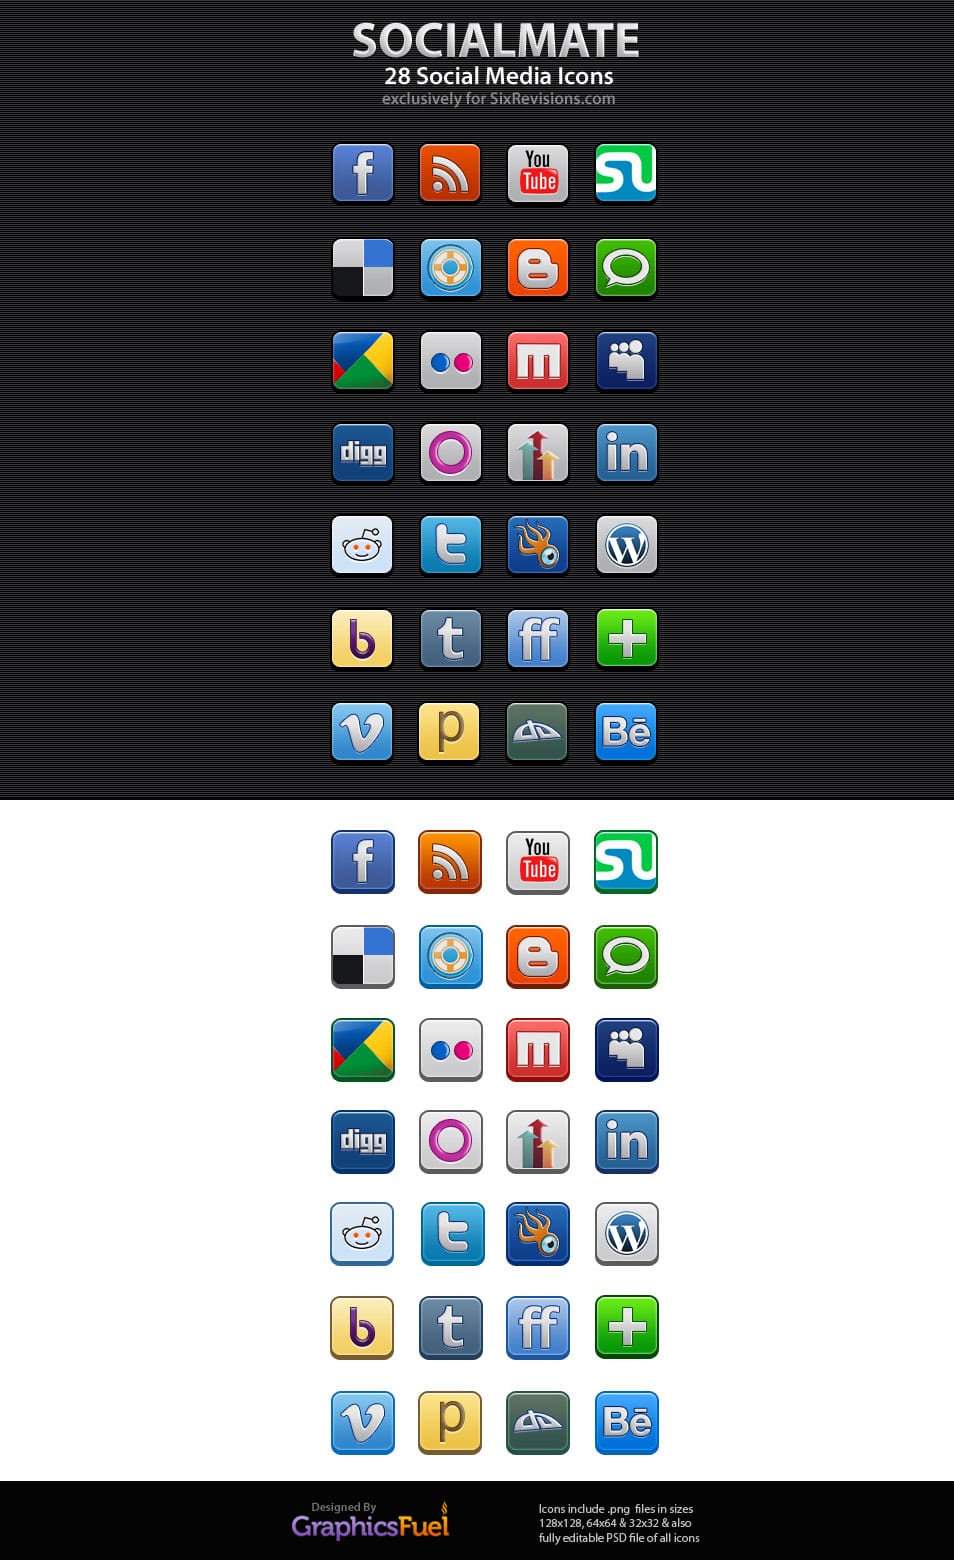 SocialMate: 28 Free Social Media Icons